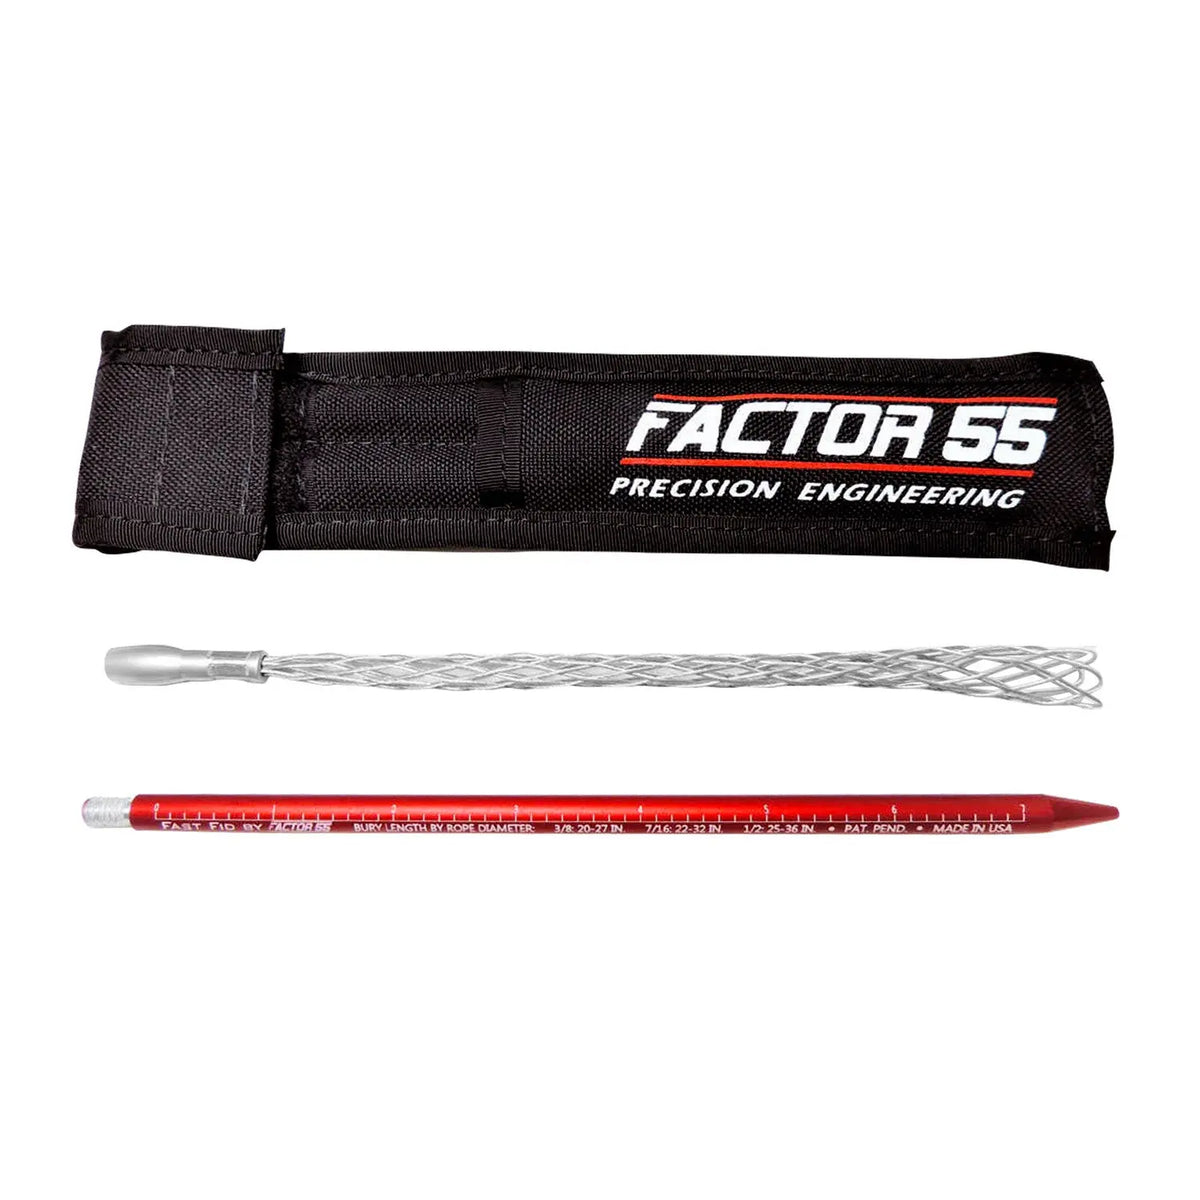 Factor 55 - Fast Fid Factor 55